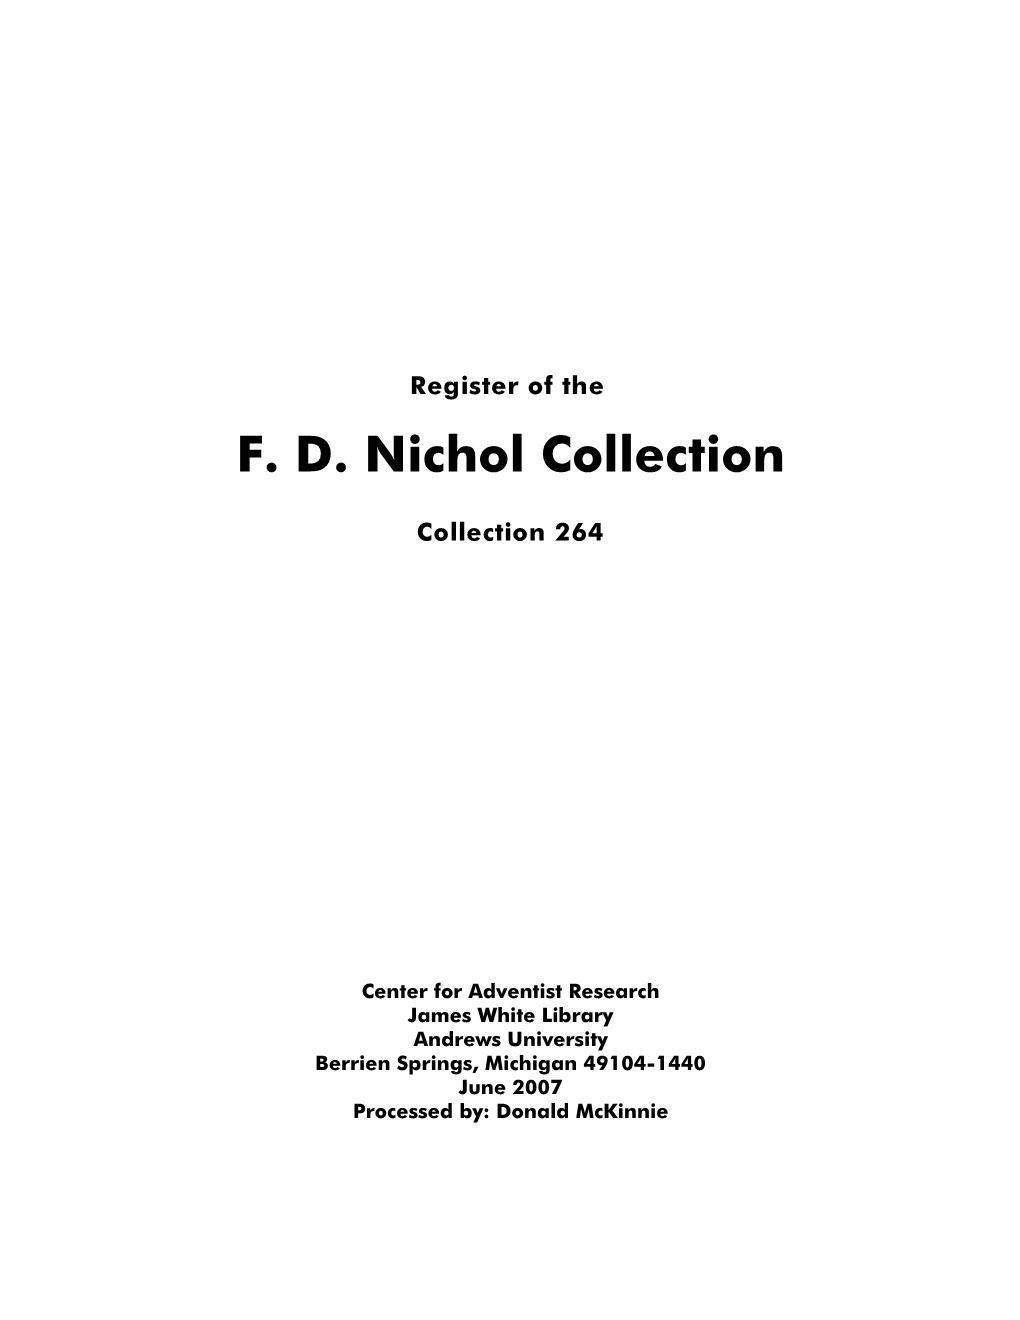 F. D. Nichol Collection